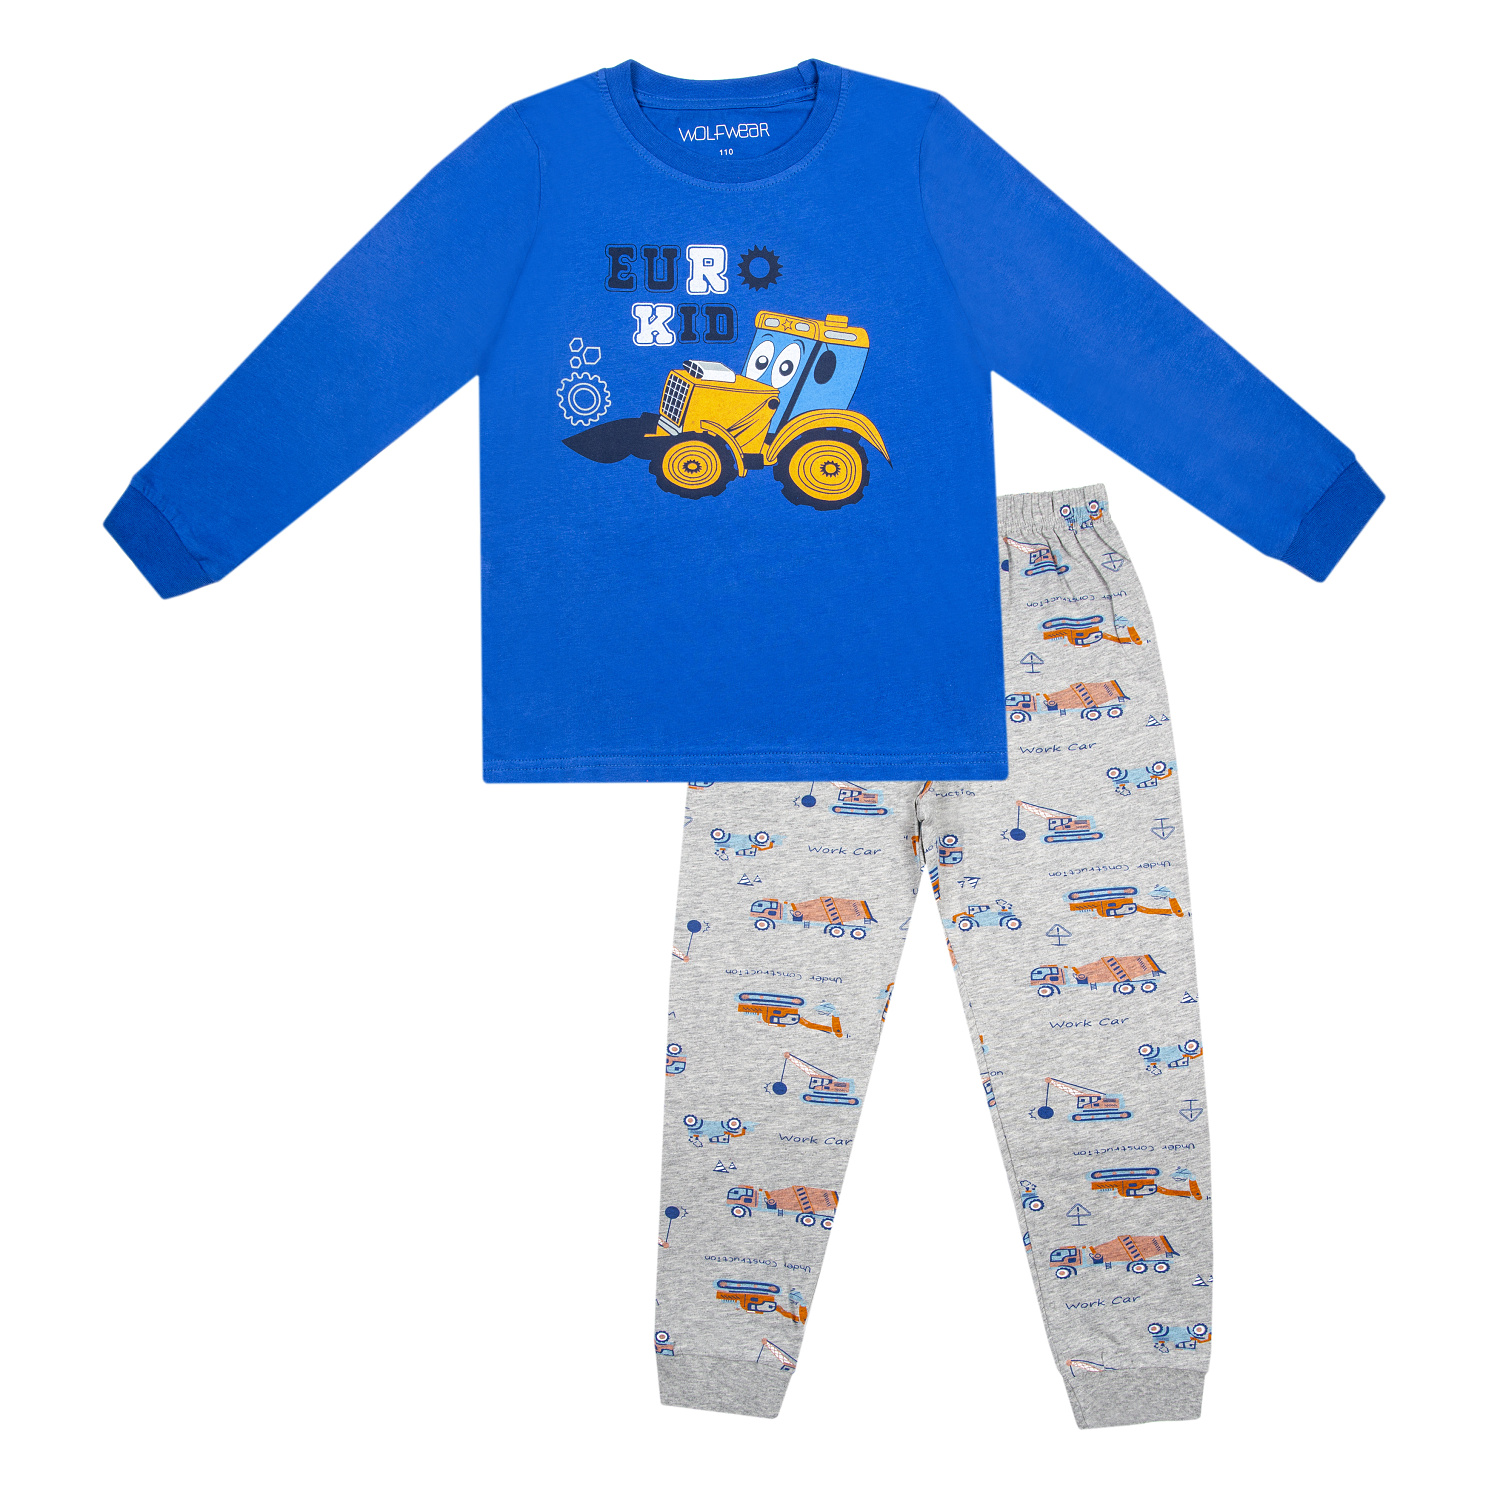 Chlapecké pyžamo - Wolf S2355B, modrá Barva: Modrá, Velikost: 116